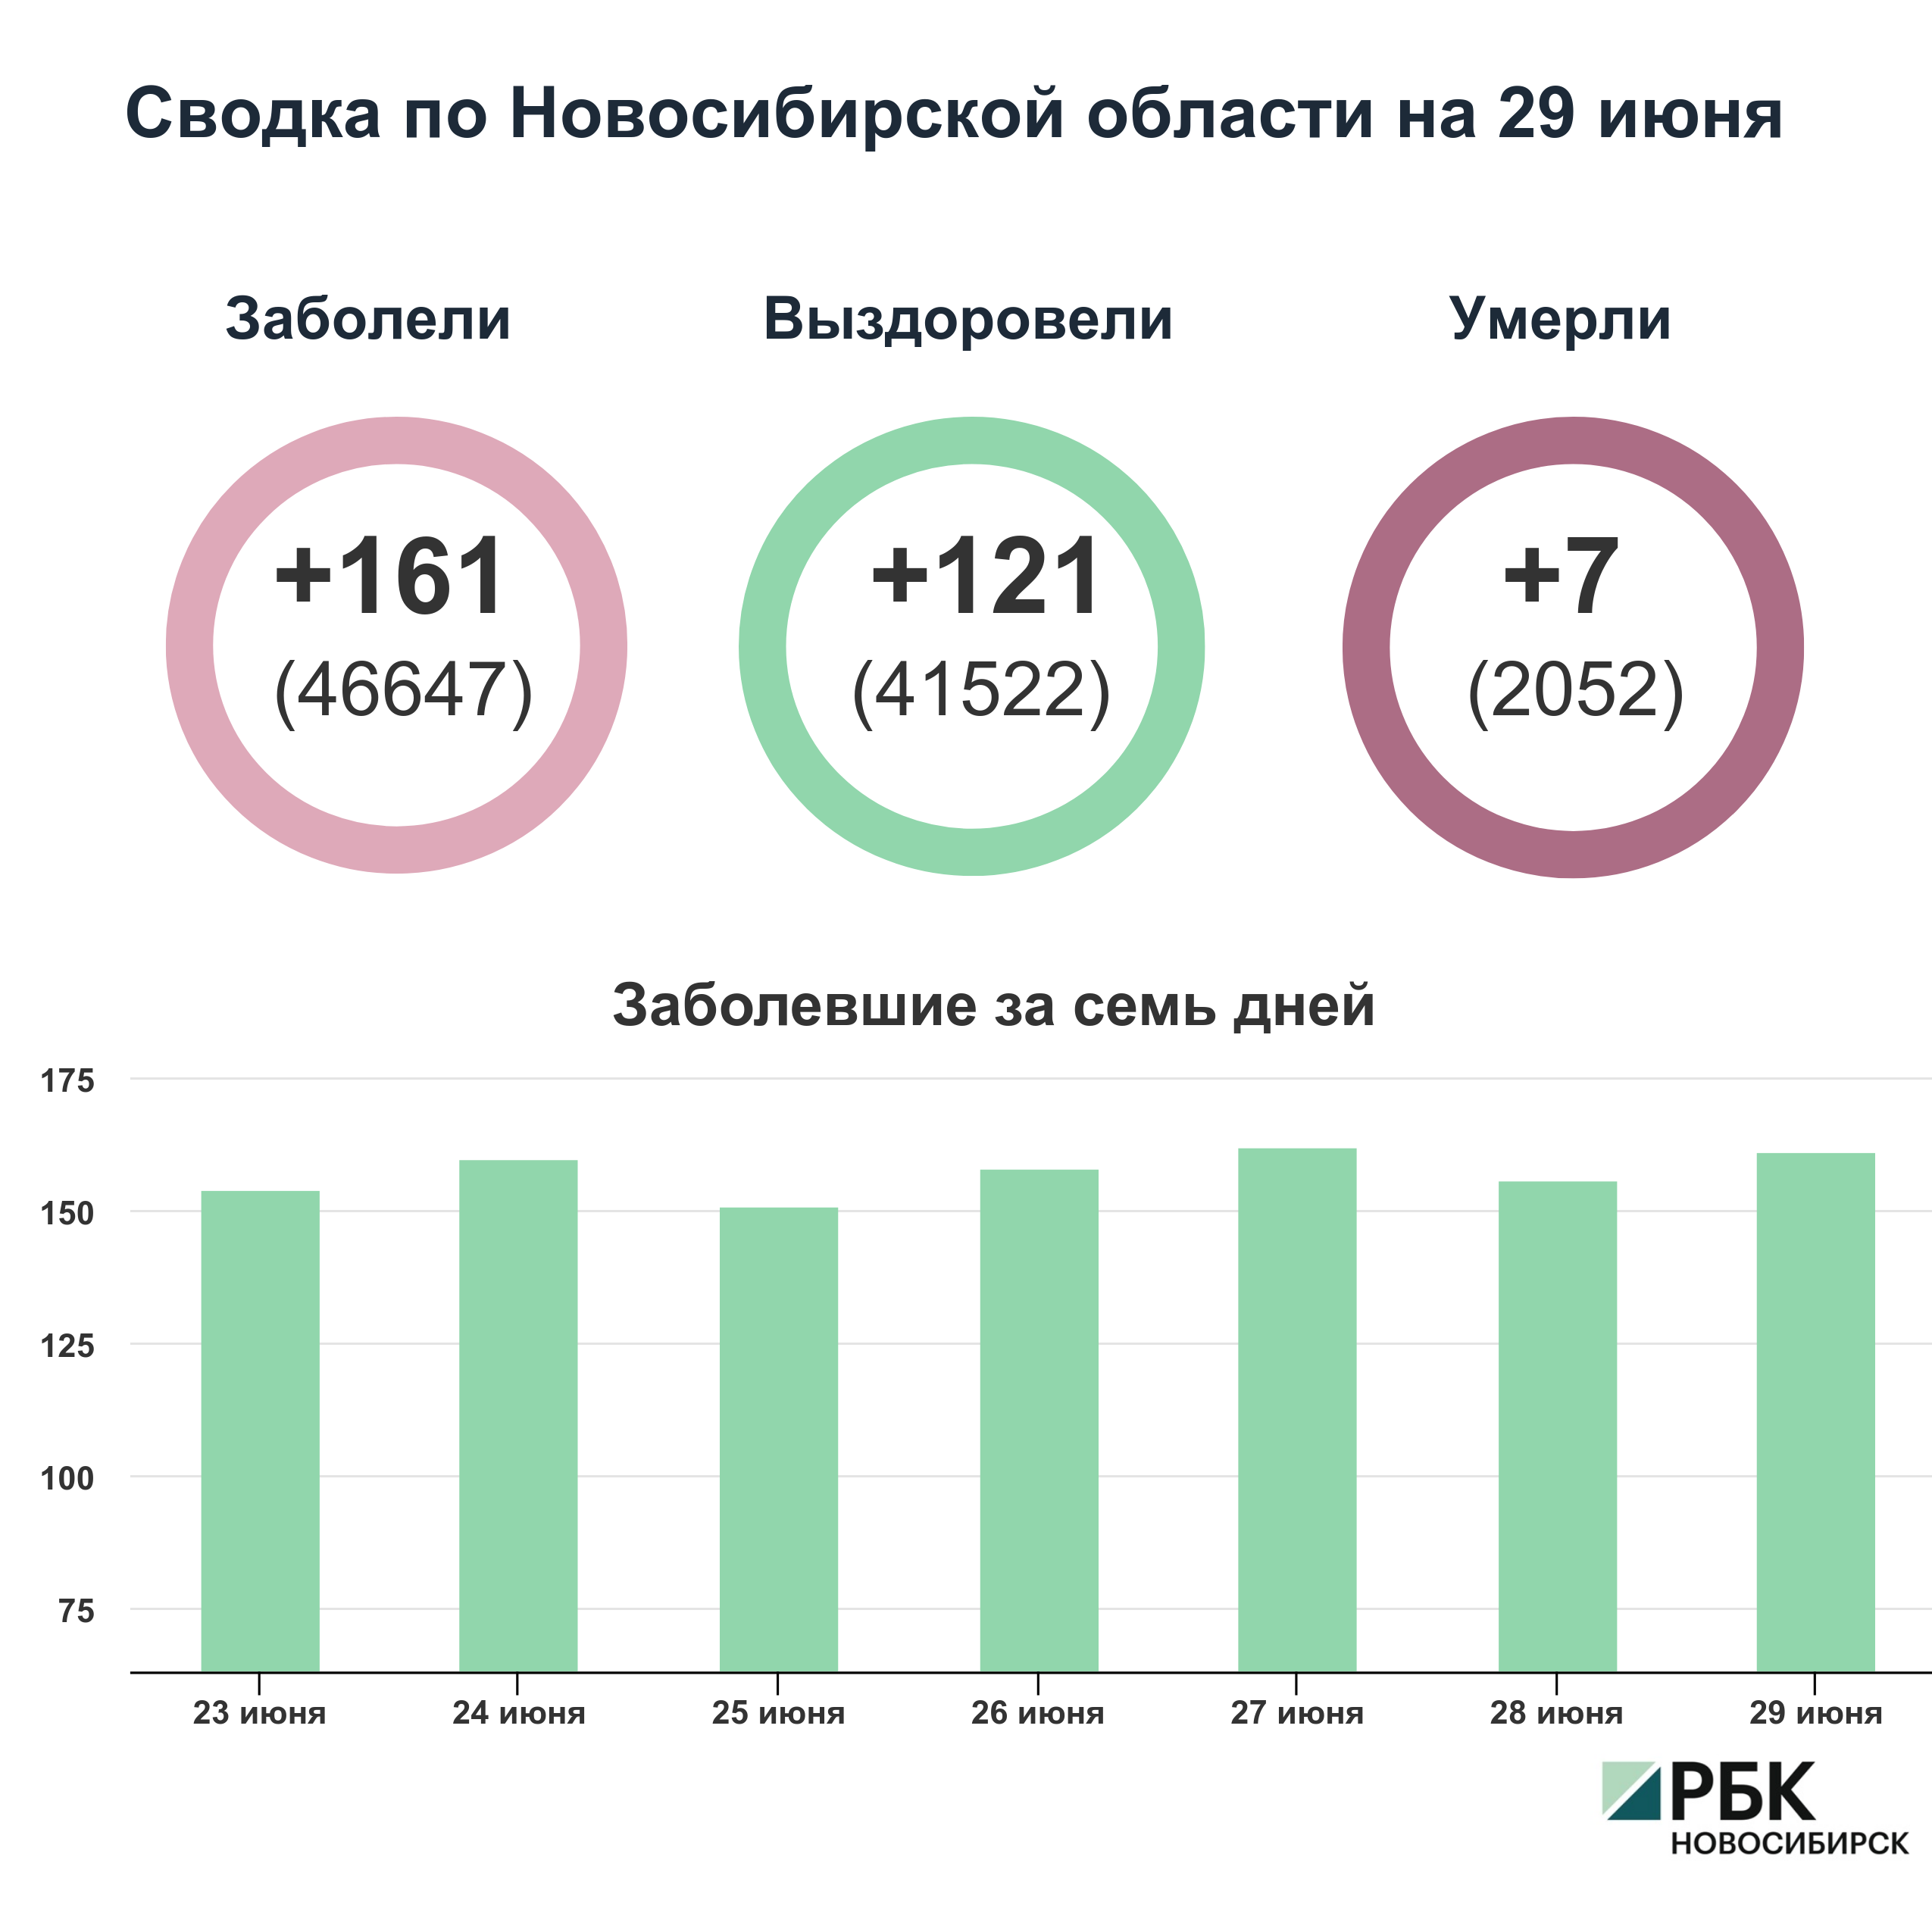 Коронавирус в Новосибирске: сводка на 29 июня